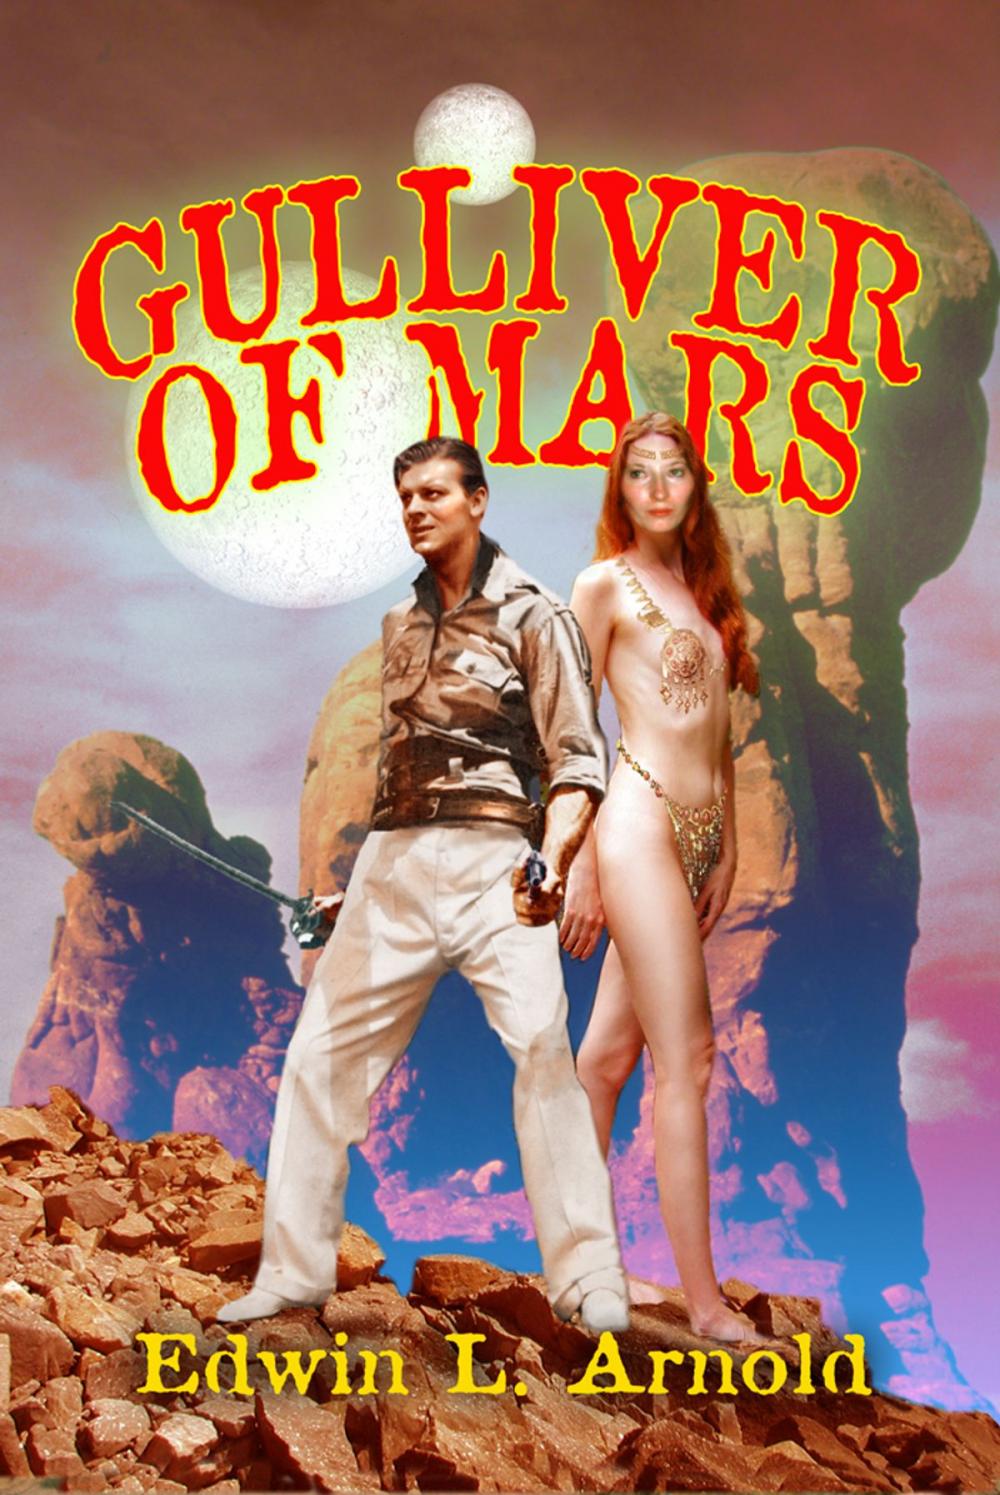 Big bigCover of Gulliver of Mars